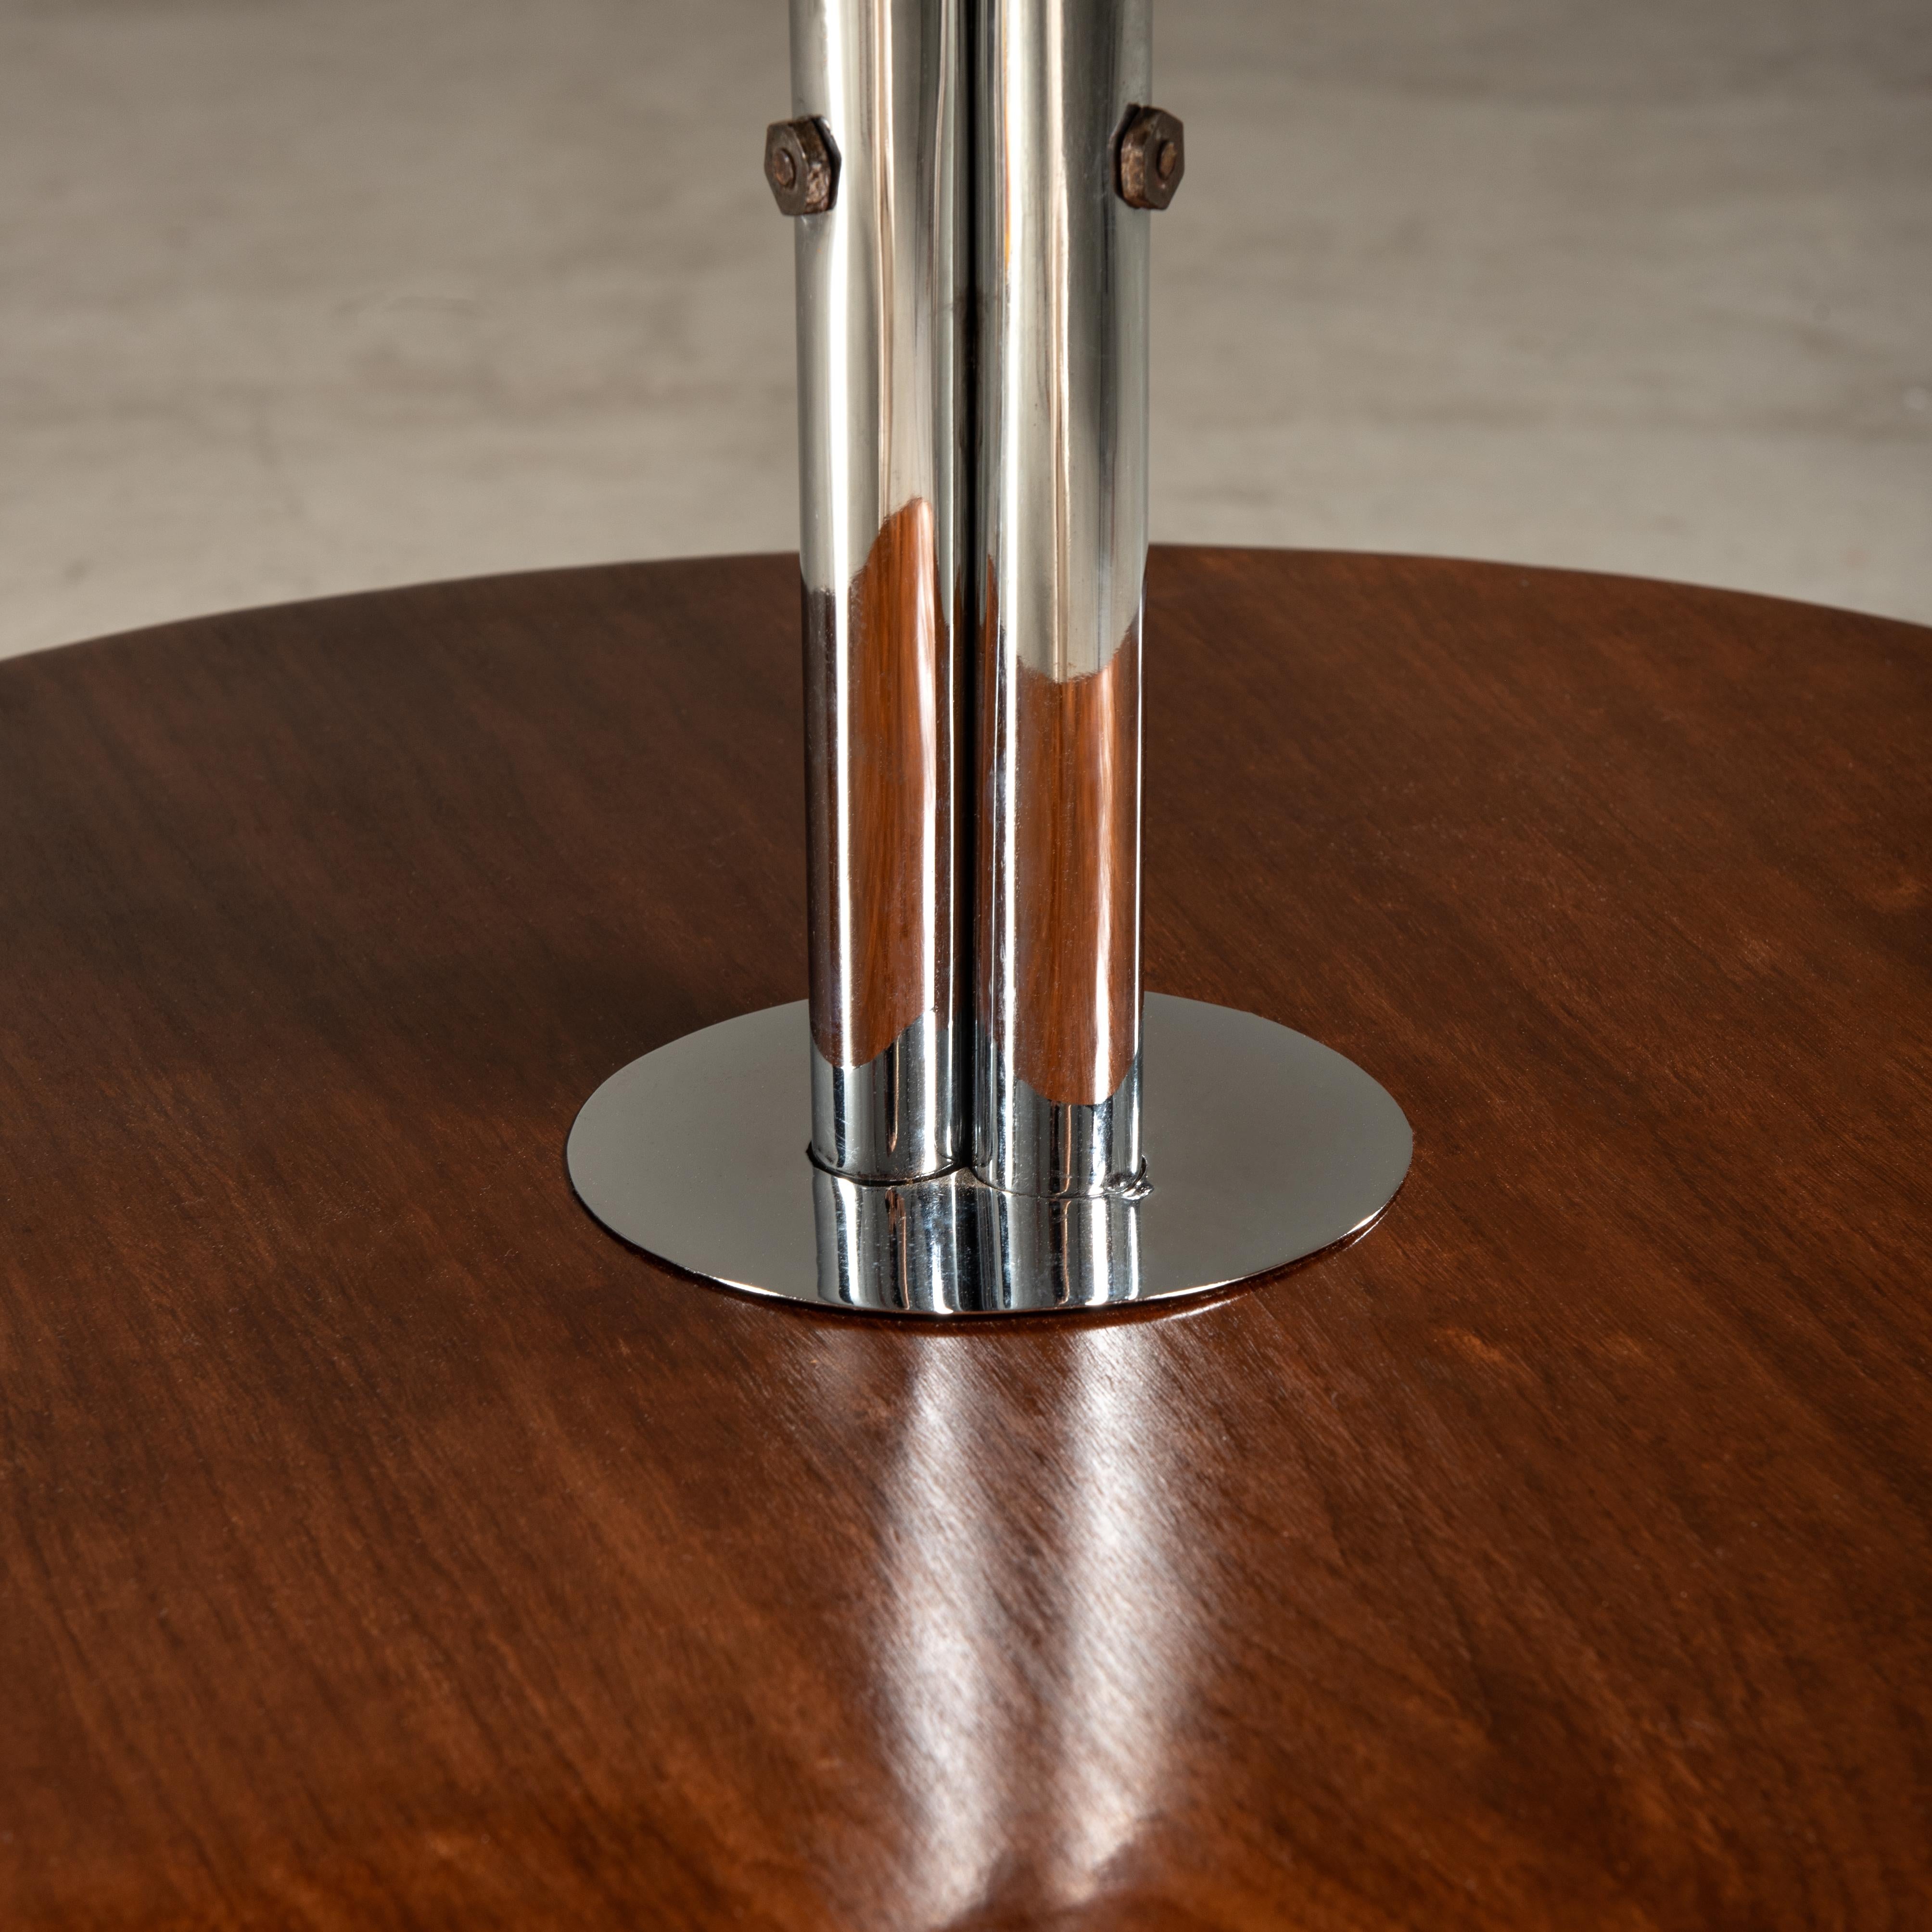 Art Deco Side Table In Tubular Metal and Wood, by John Graz, Brazilian Modern For Sale 2